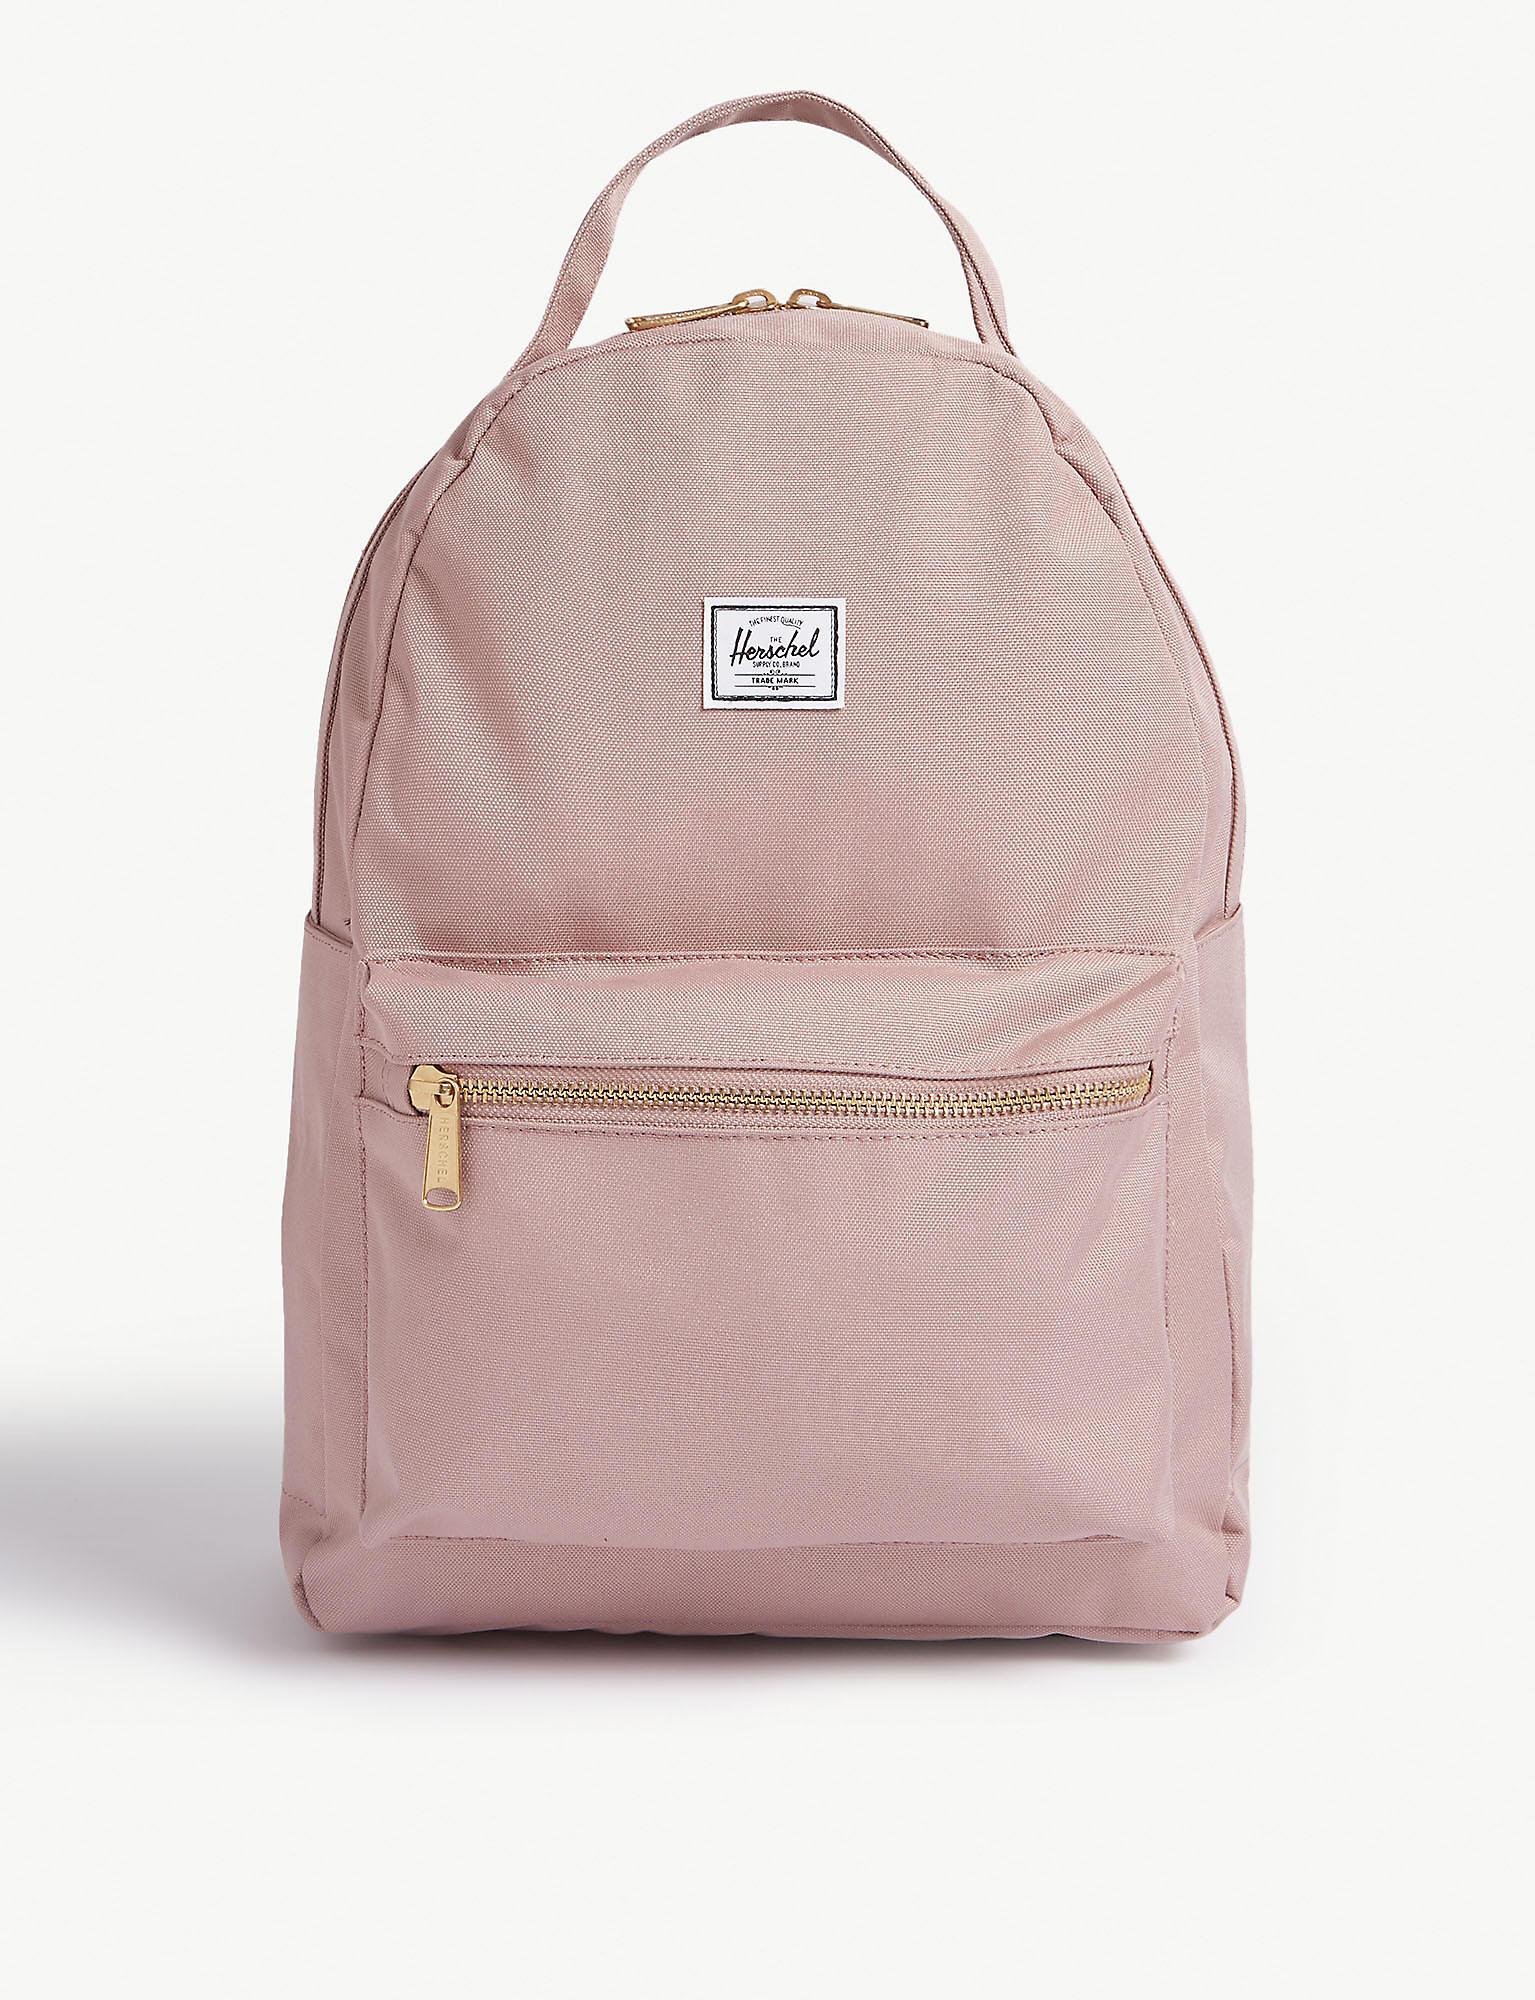 Herschel Supply Co. Nova Medium Canvas Backpack in Pink - Lyst